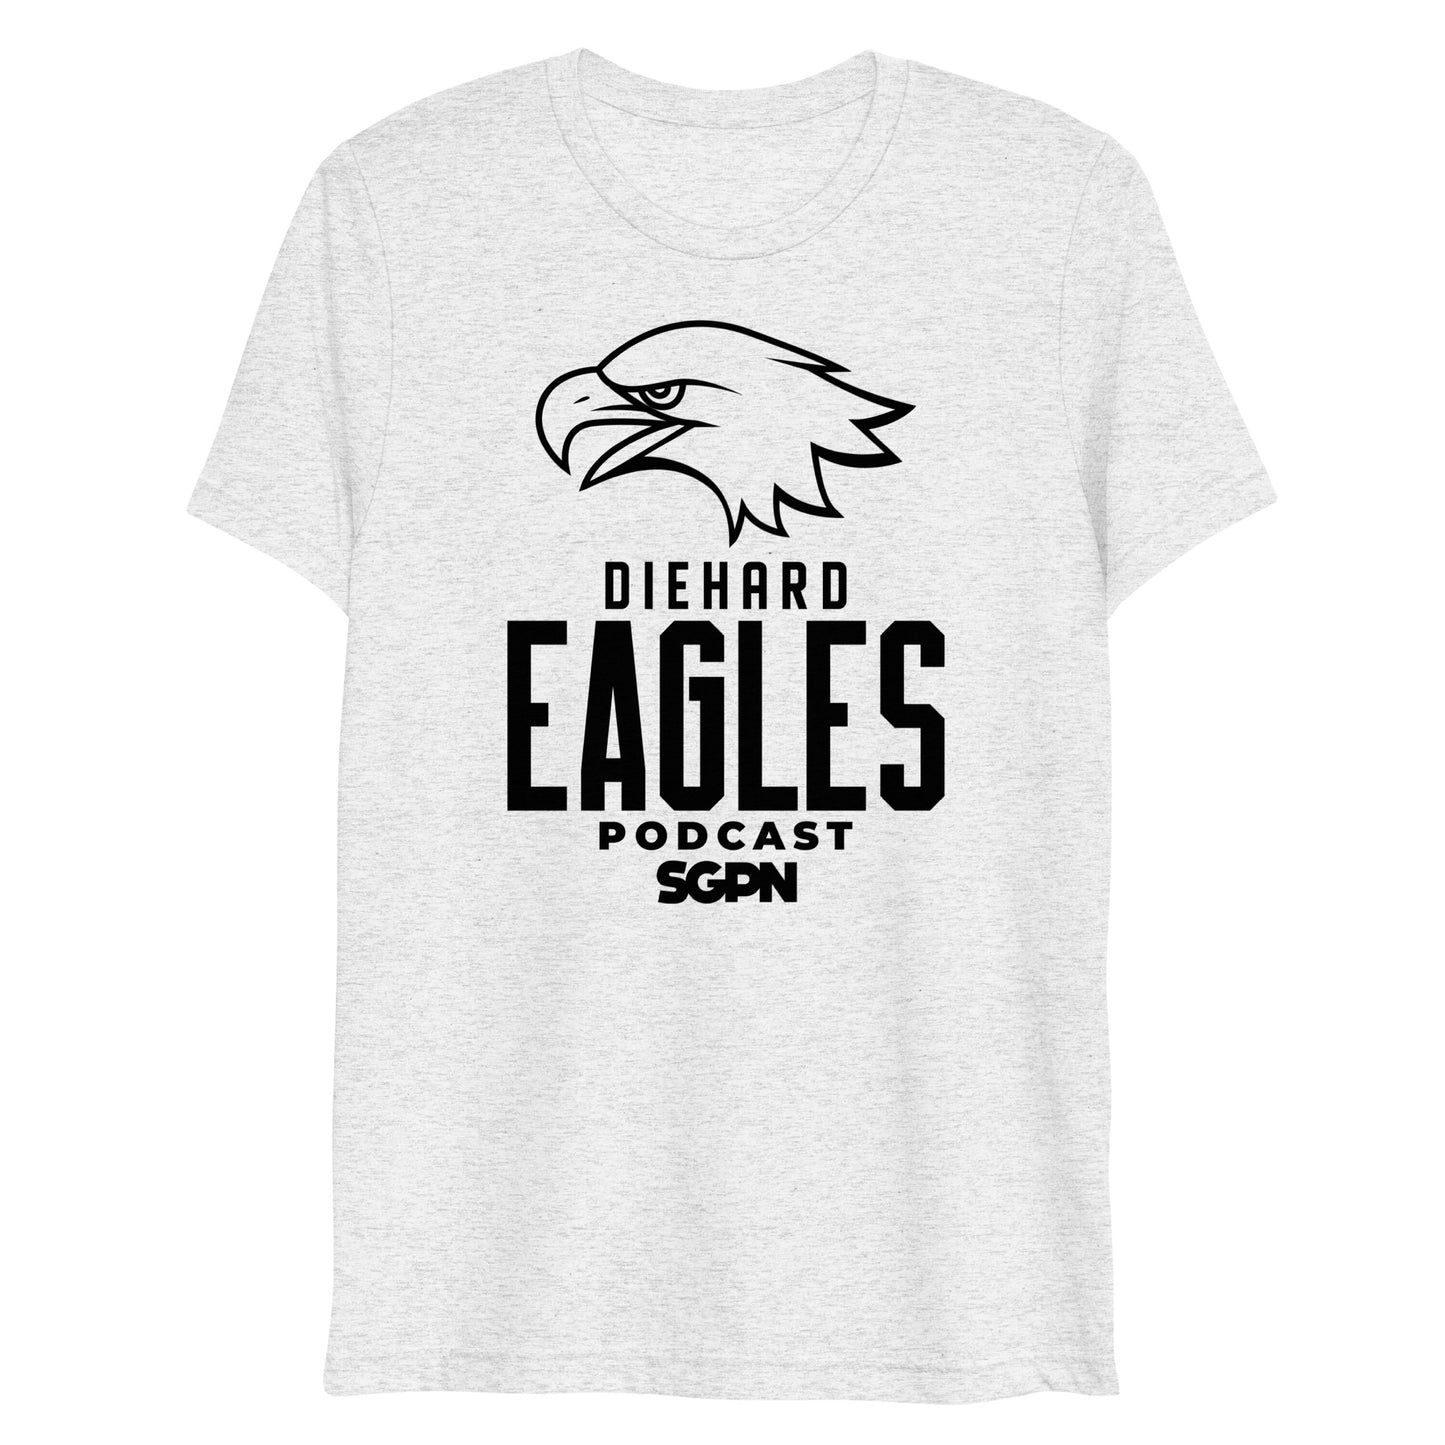 Diehard Eagles Podcast Short sleeve t-shirt (Black Logo)